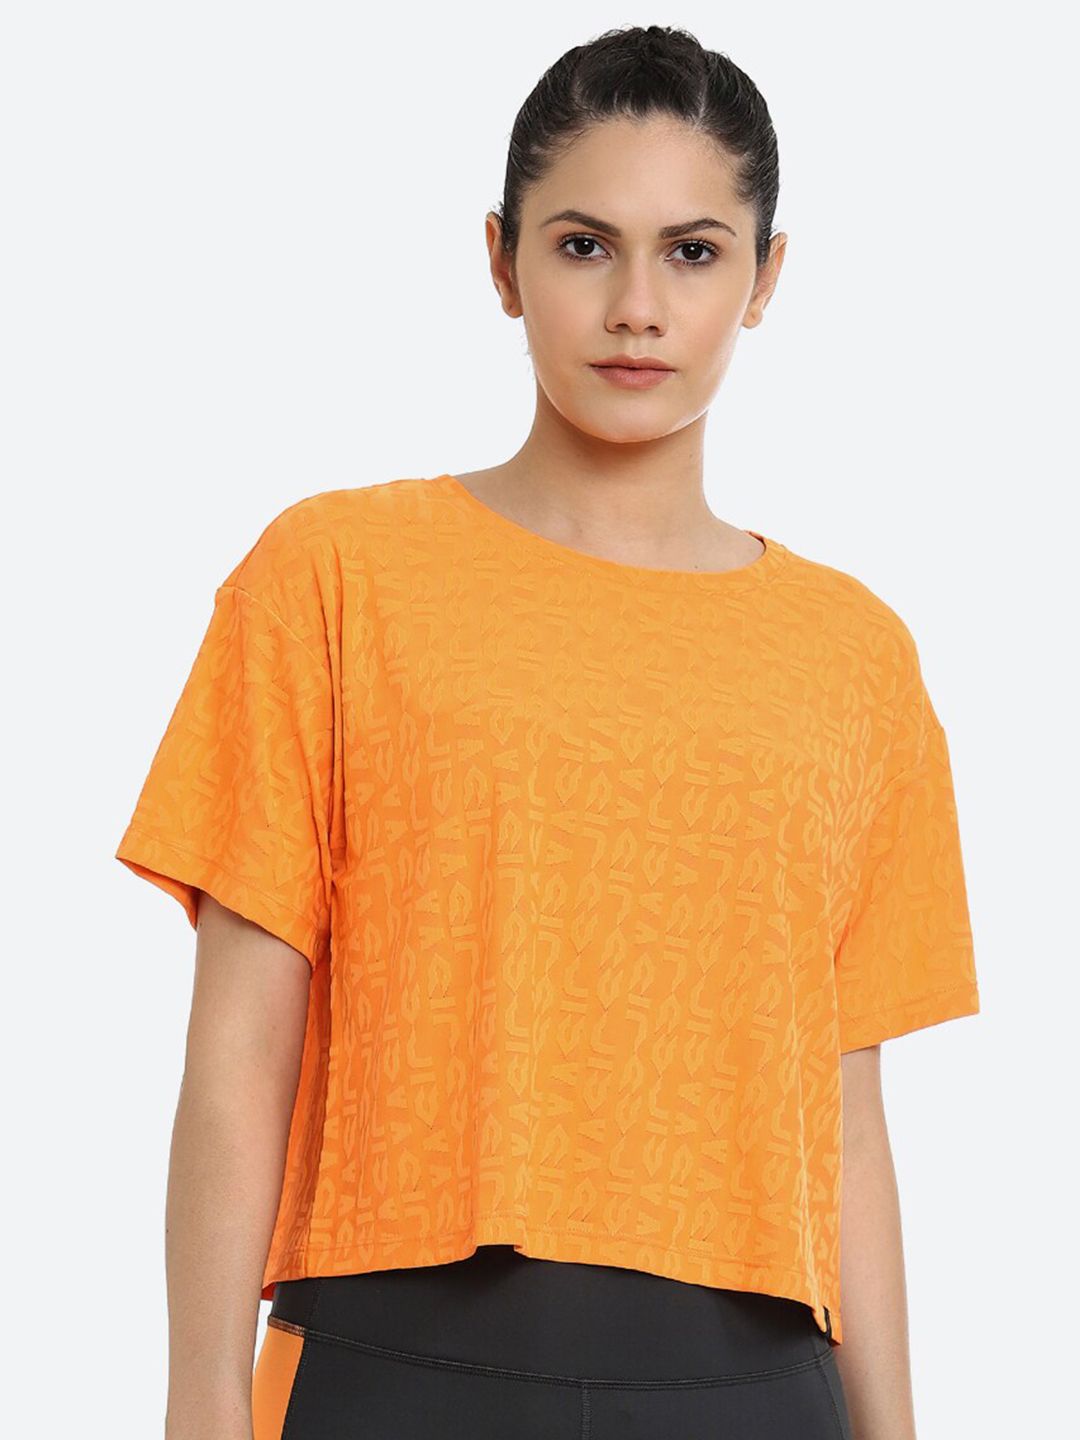 ASICS Women Orange Self Design W CROPPED LOGO JACQUARD SS Cotton Top Price in India